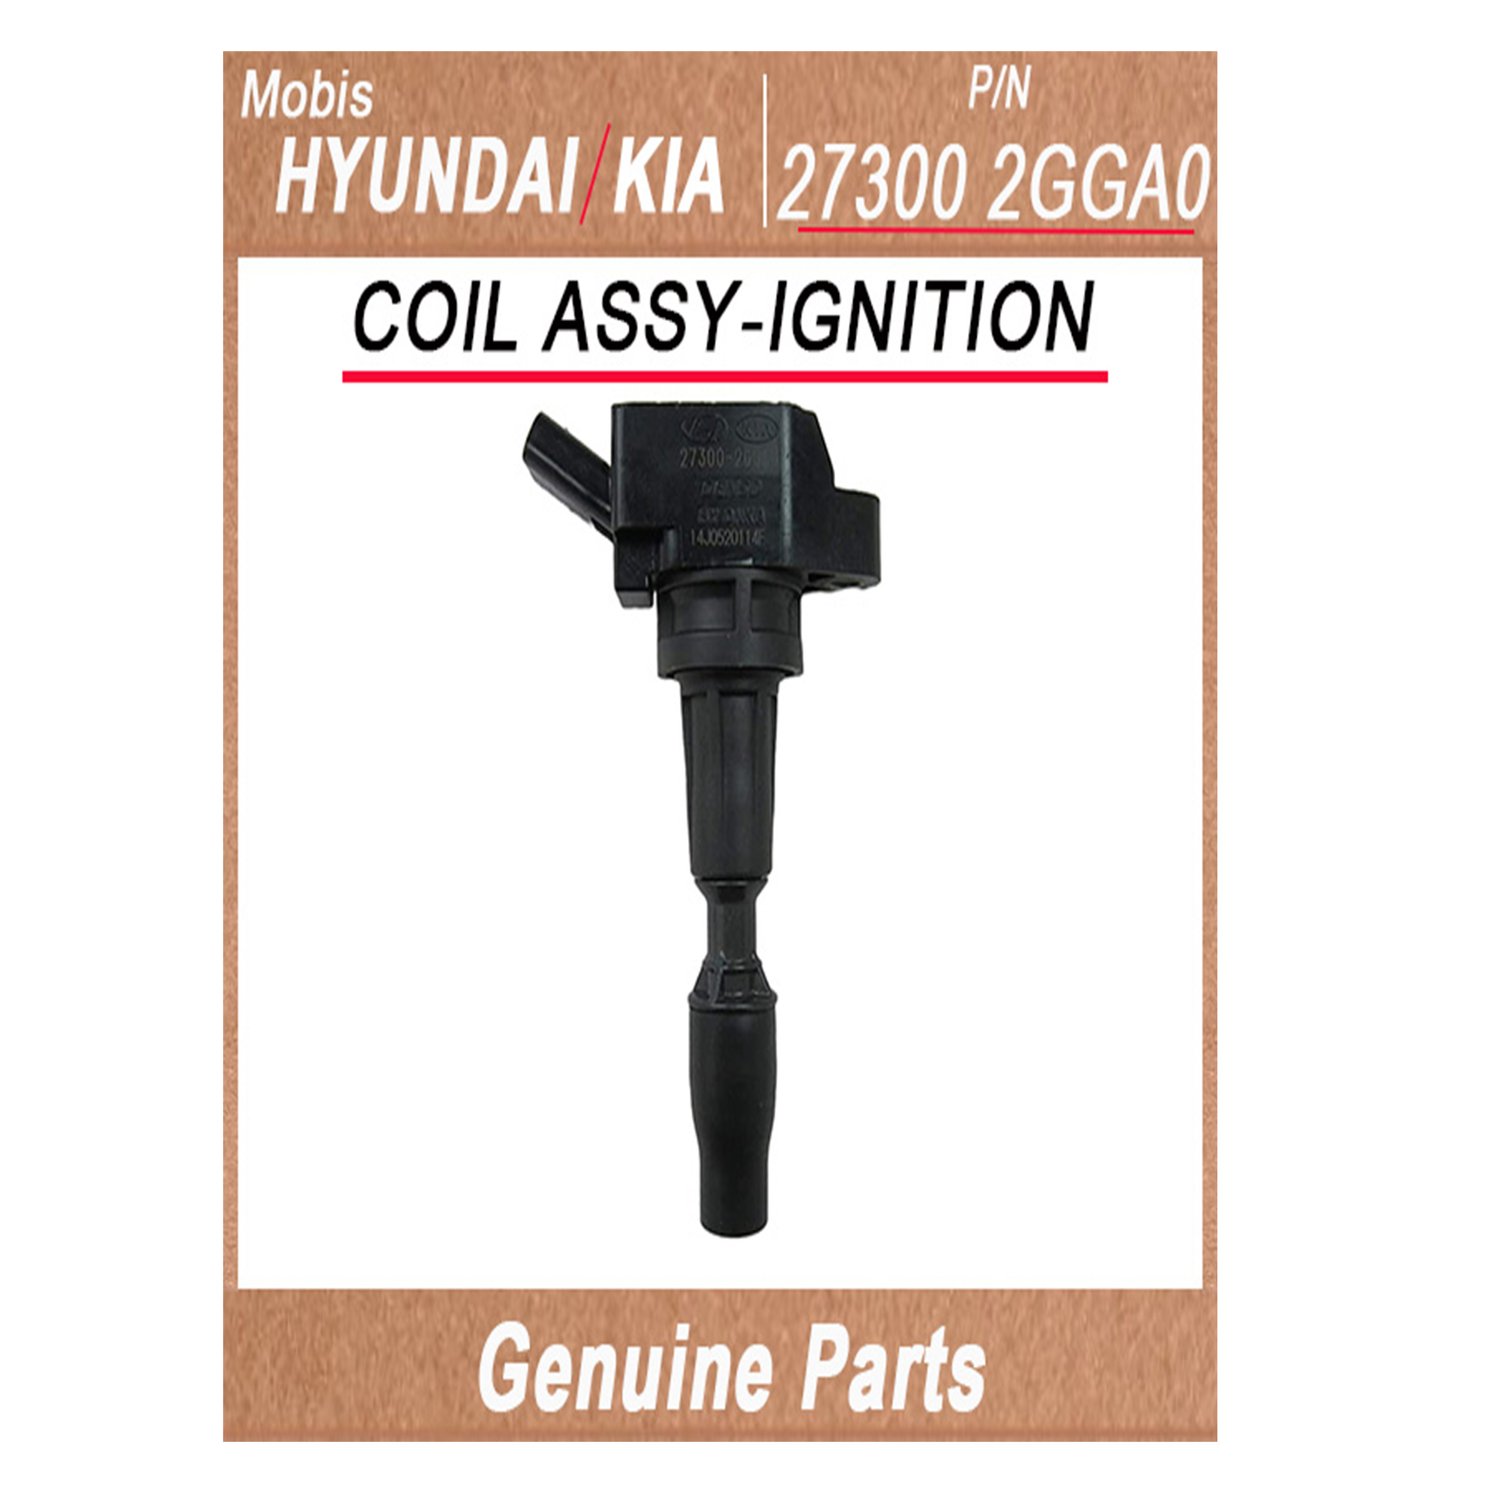 273002GGA0 _ COIL ASSY_IGNITION _ Genuine Korean Automotive Spare Parts _ Hyundai Kia _Mobis_